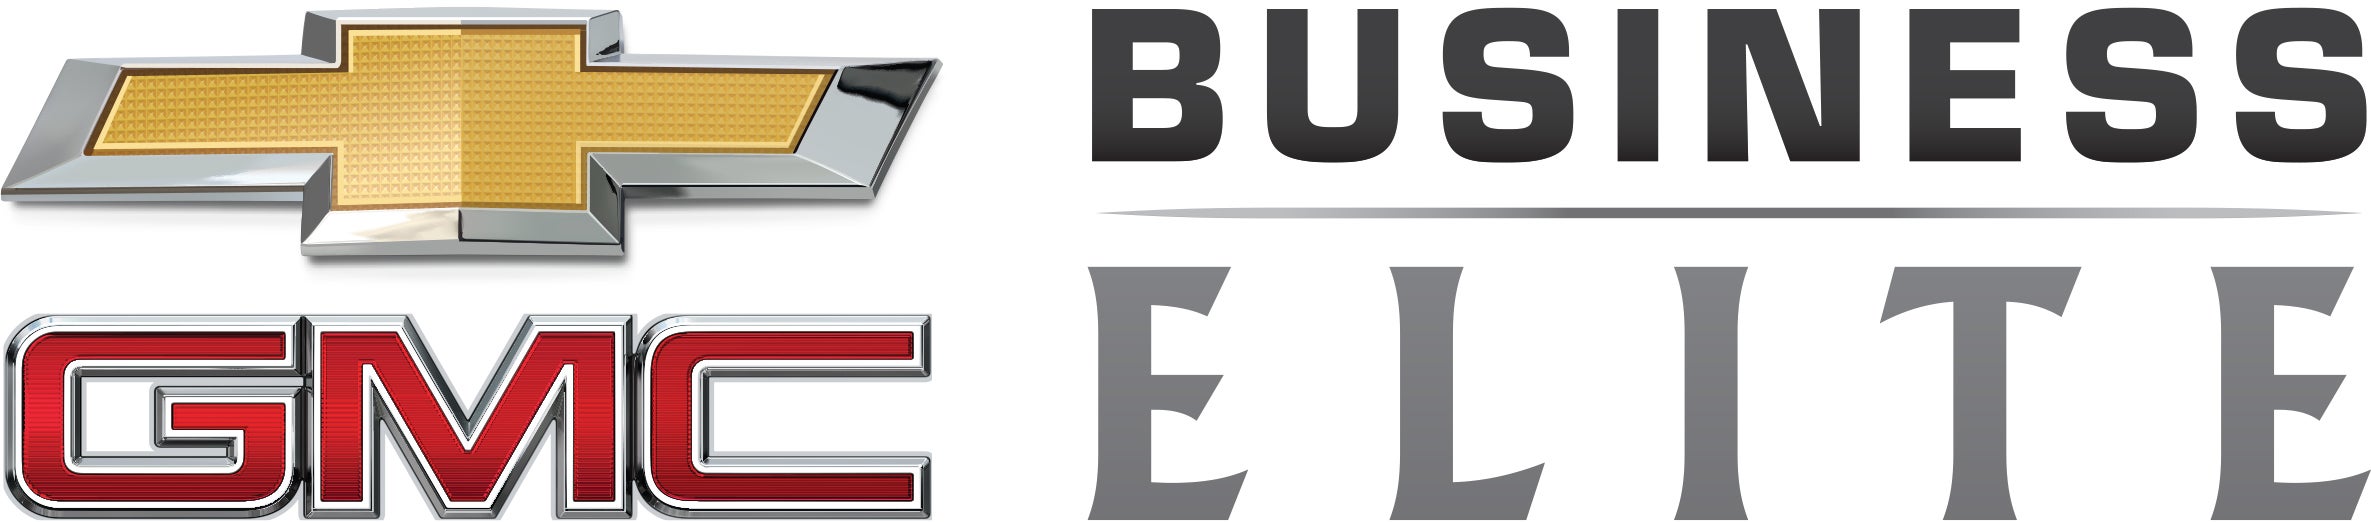 business elite logo